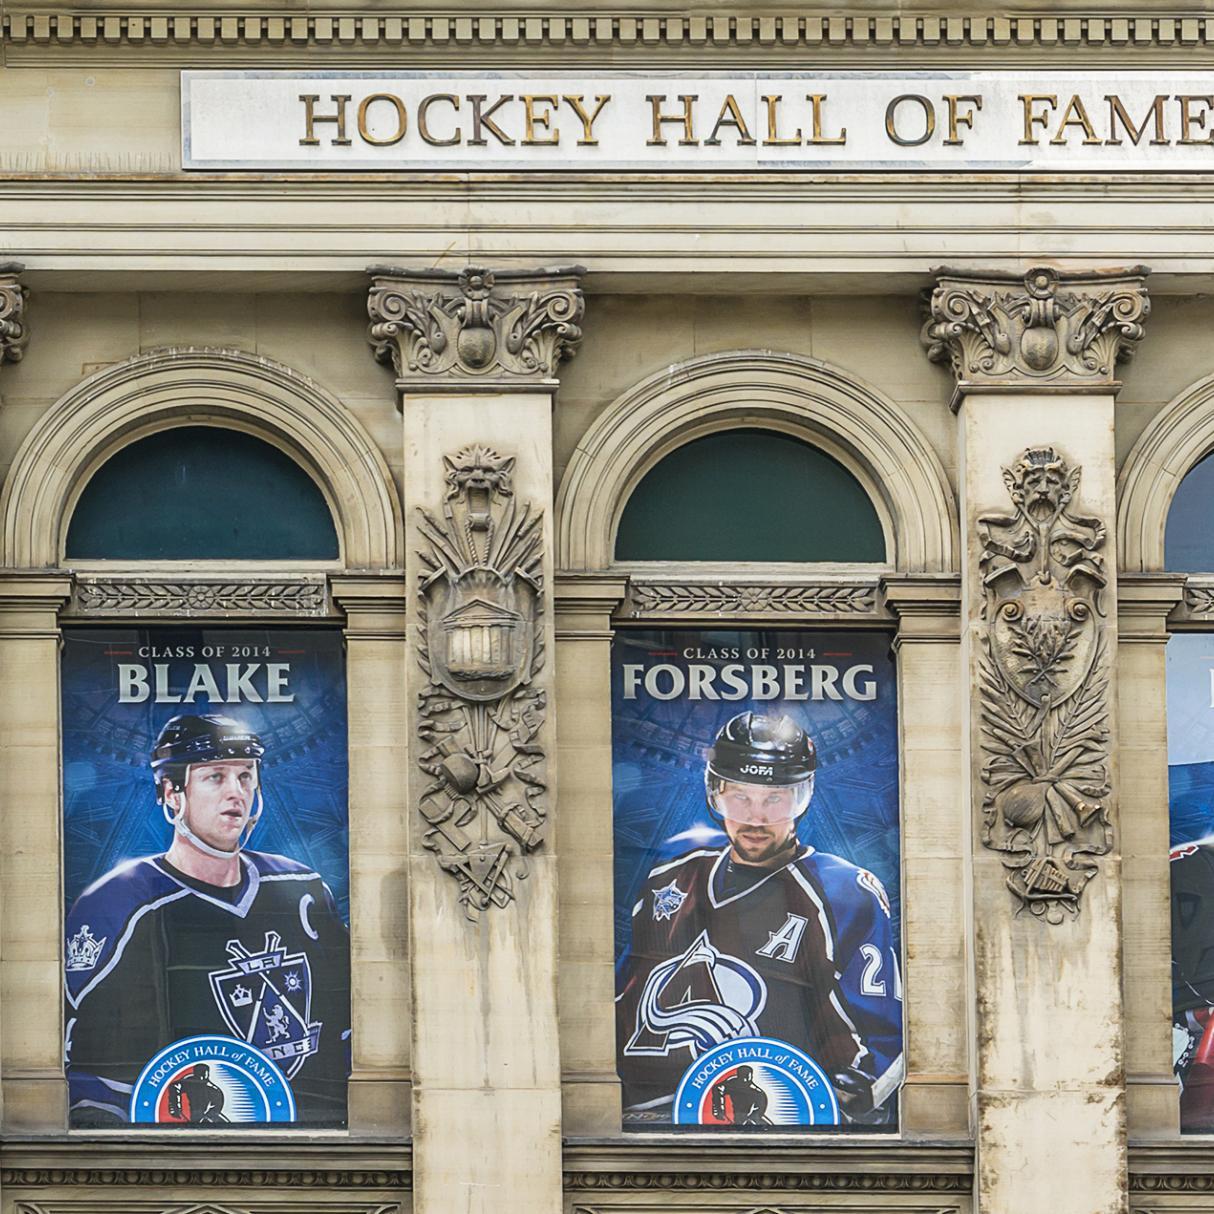 Hockey hall of fame